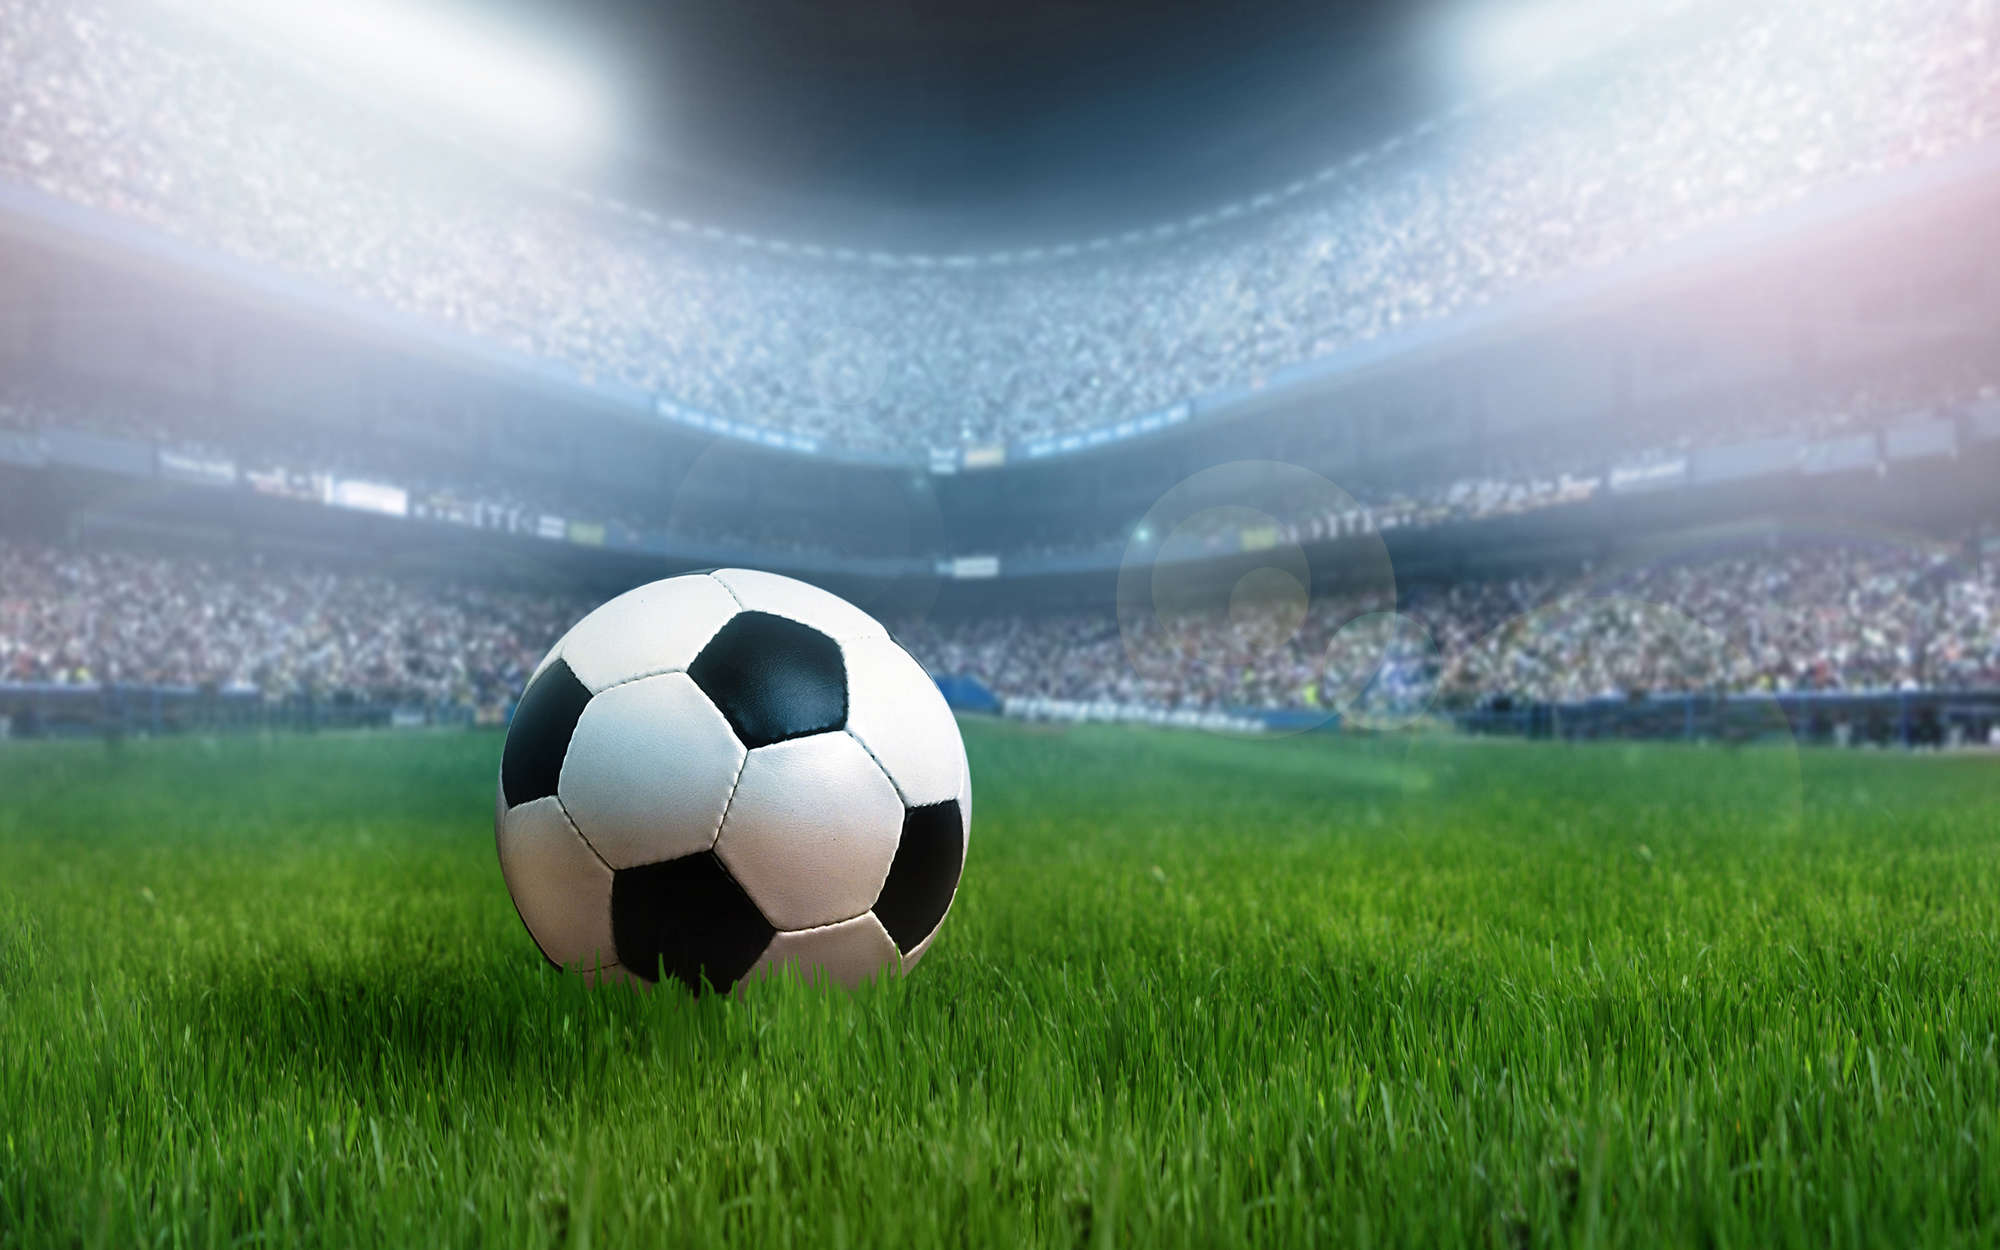             Fototapete Fußball-Arena mit Ball – Premium Glattvlies
        